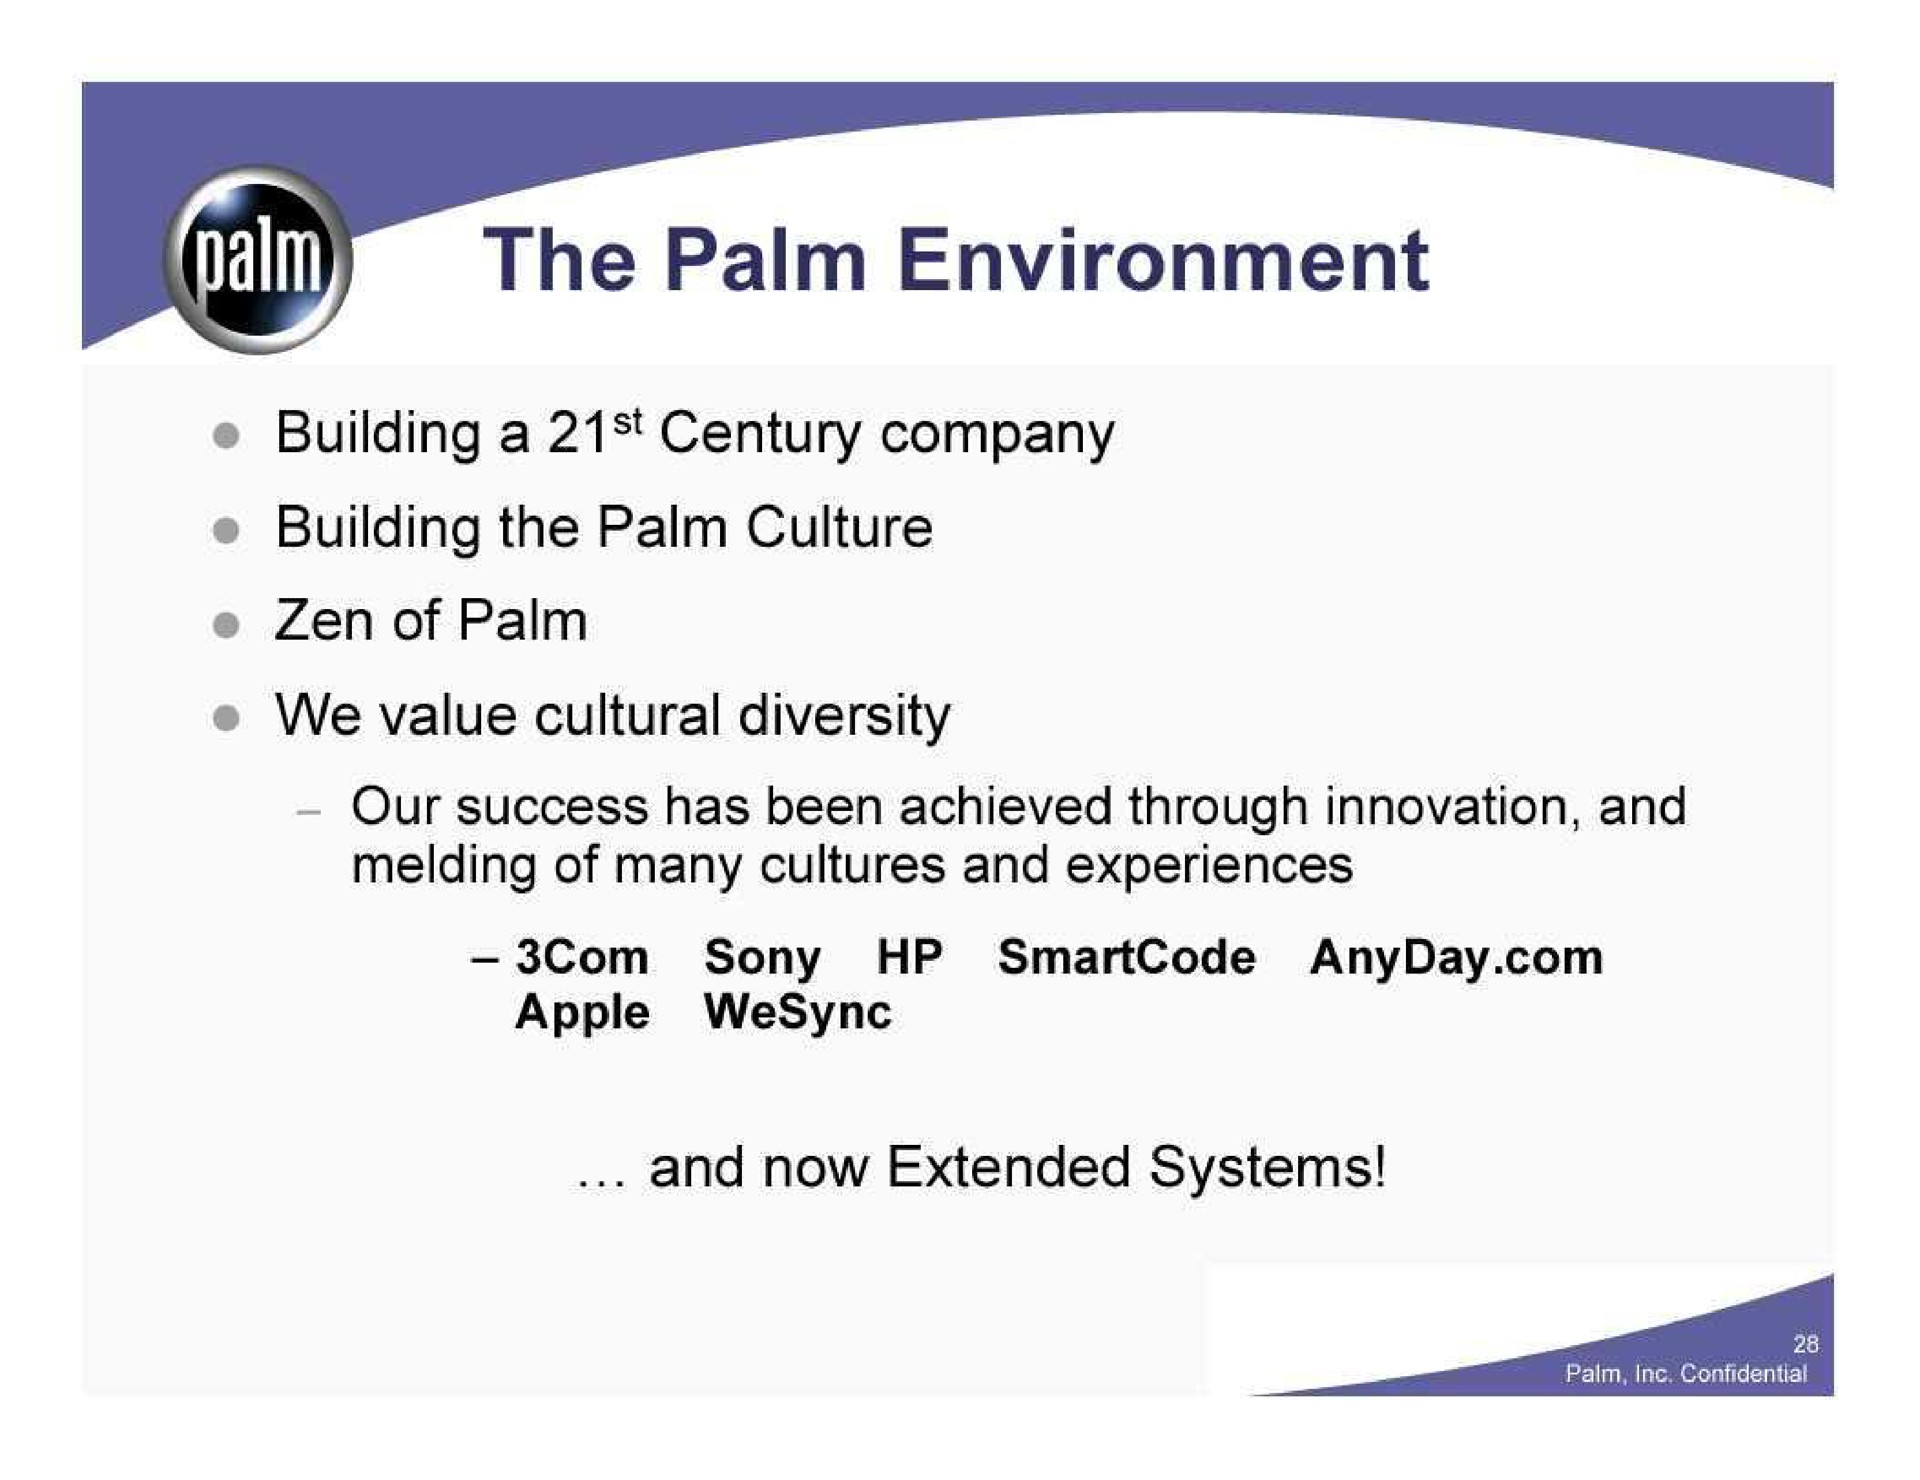 the palm environment | Palm Inc.